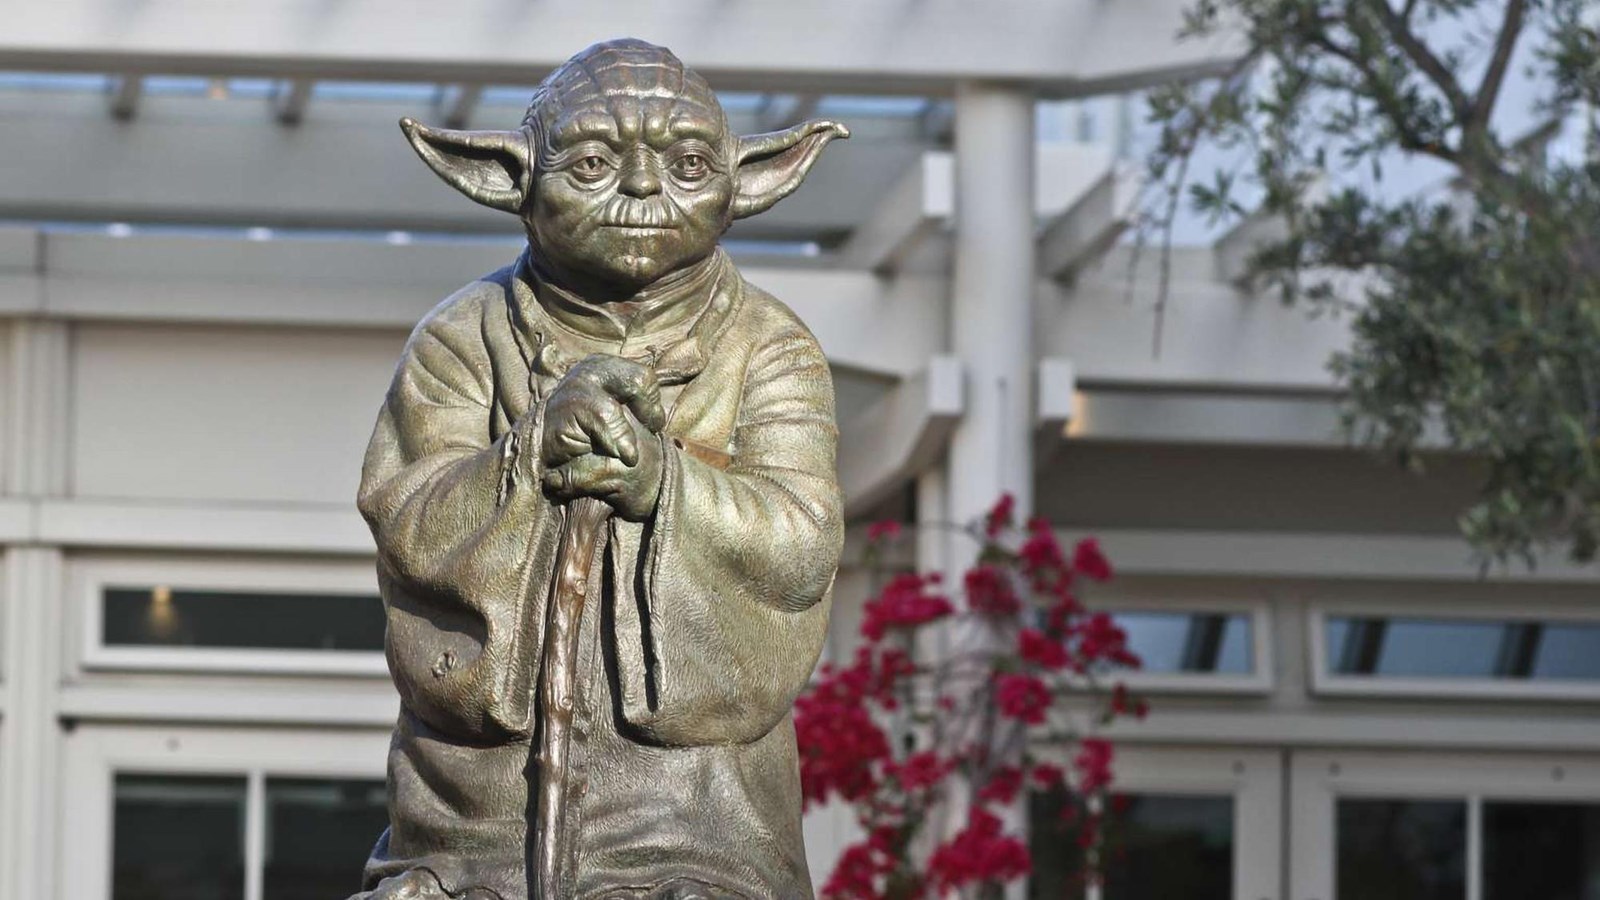 Statue/fountain of Star Wars character Yoda on courtyard.